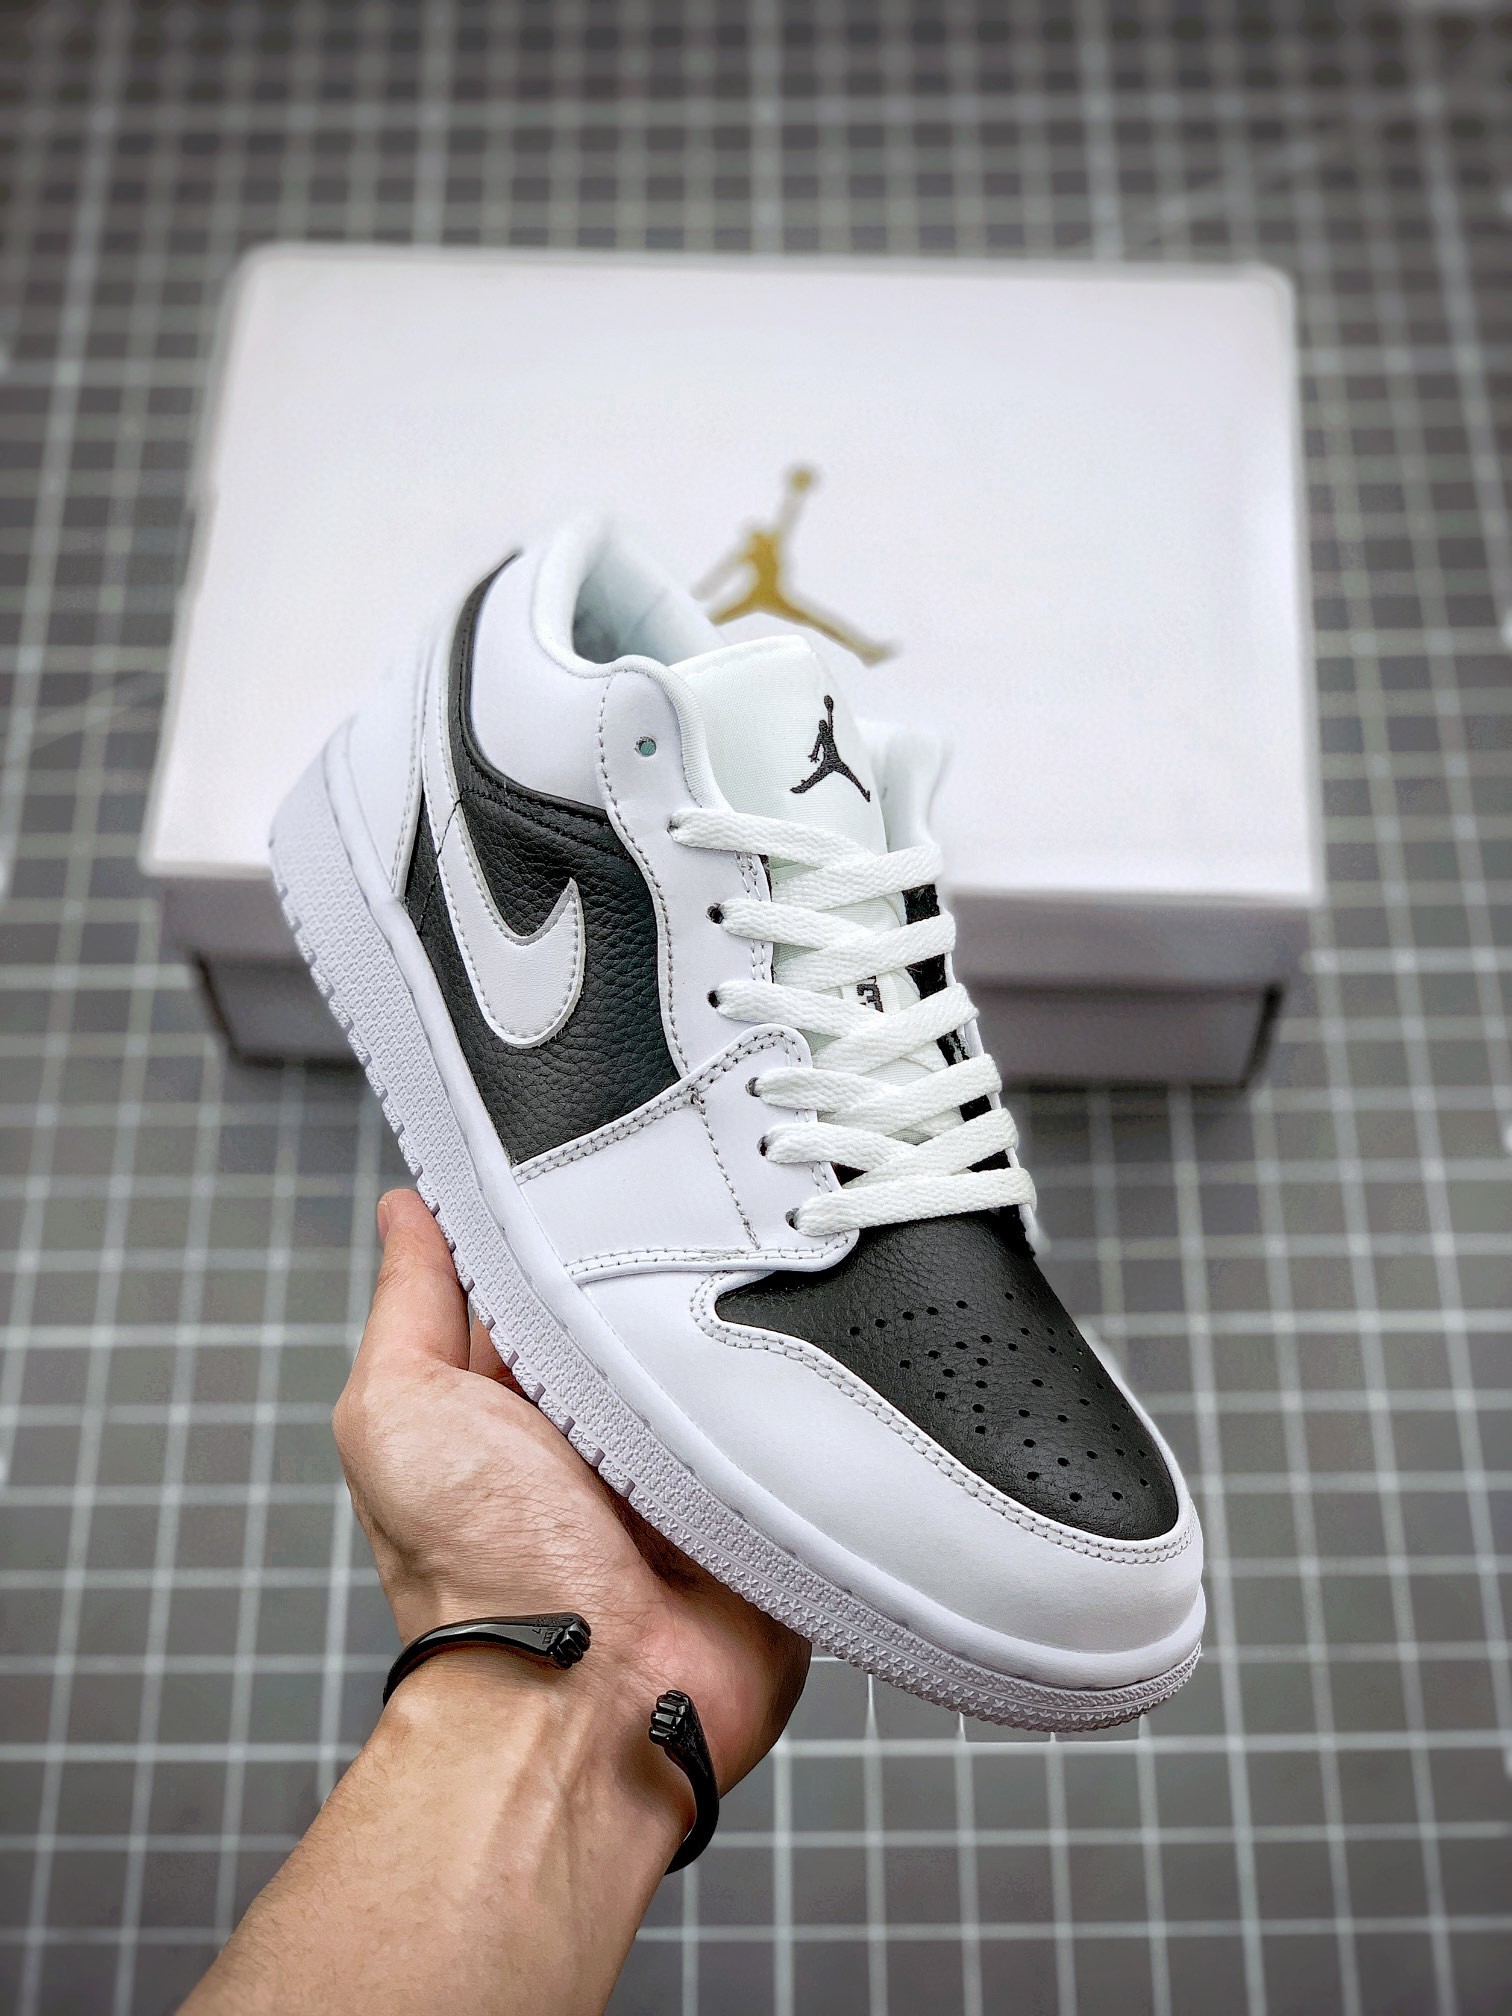 Air JD Jordan 1 Low 'Panda' White/Black Shoes